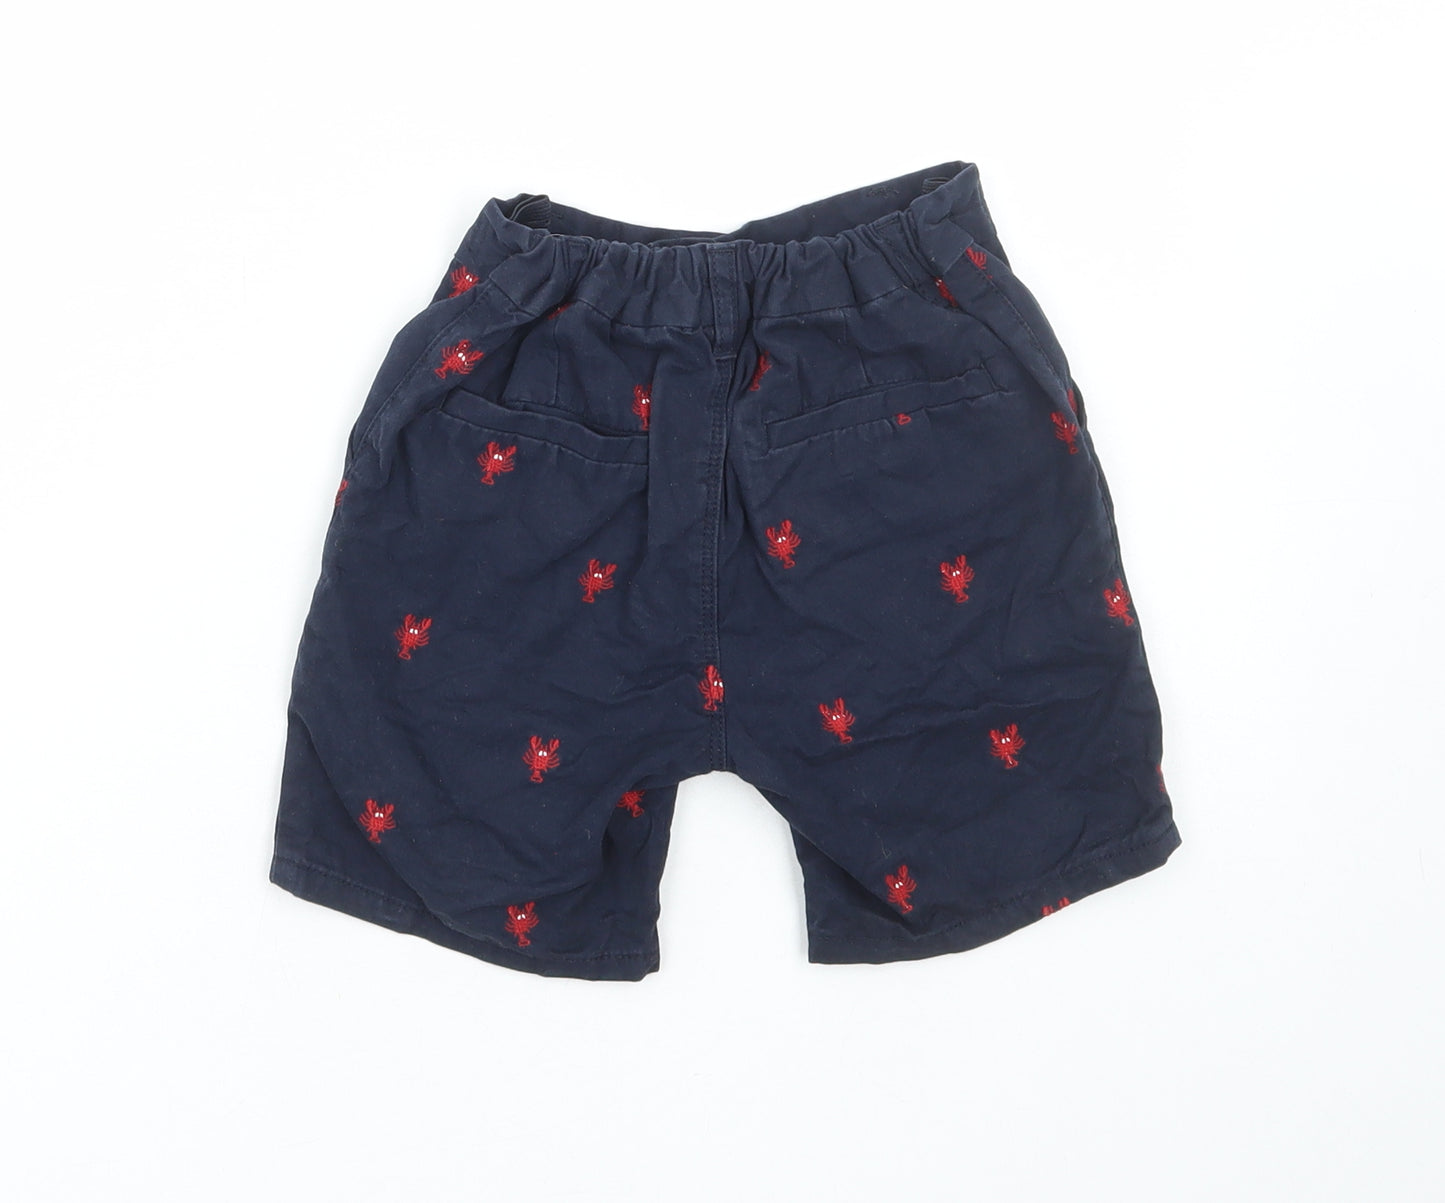 NEXT Boys Blue Geometric Cotton Chino Shorts Size 4-5 Years Regular Zip - Lobster